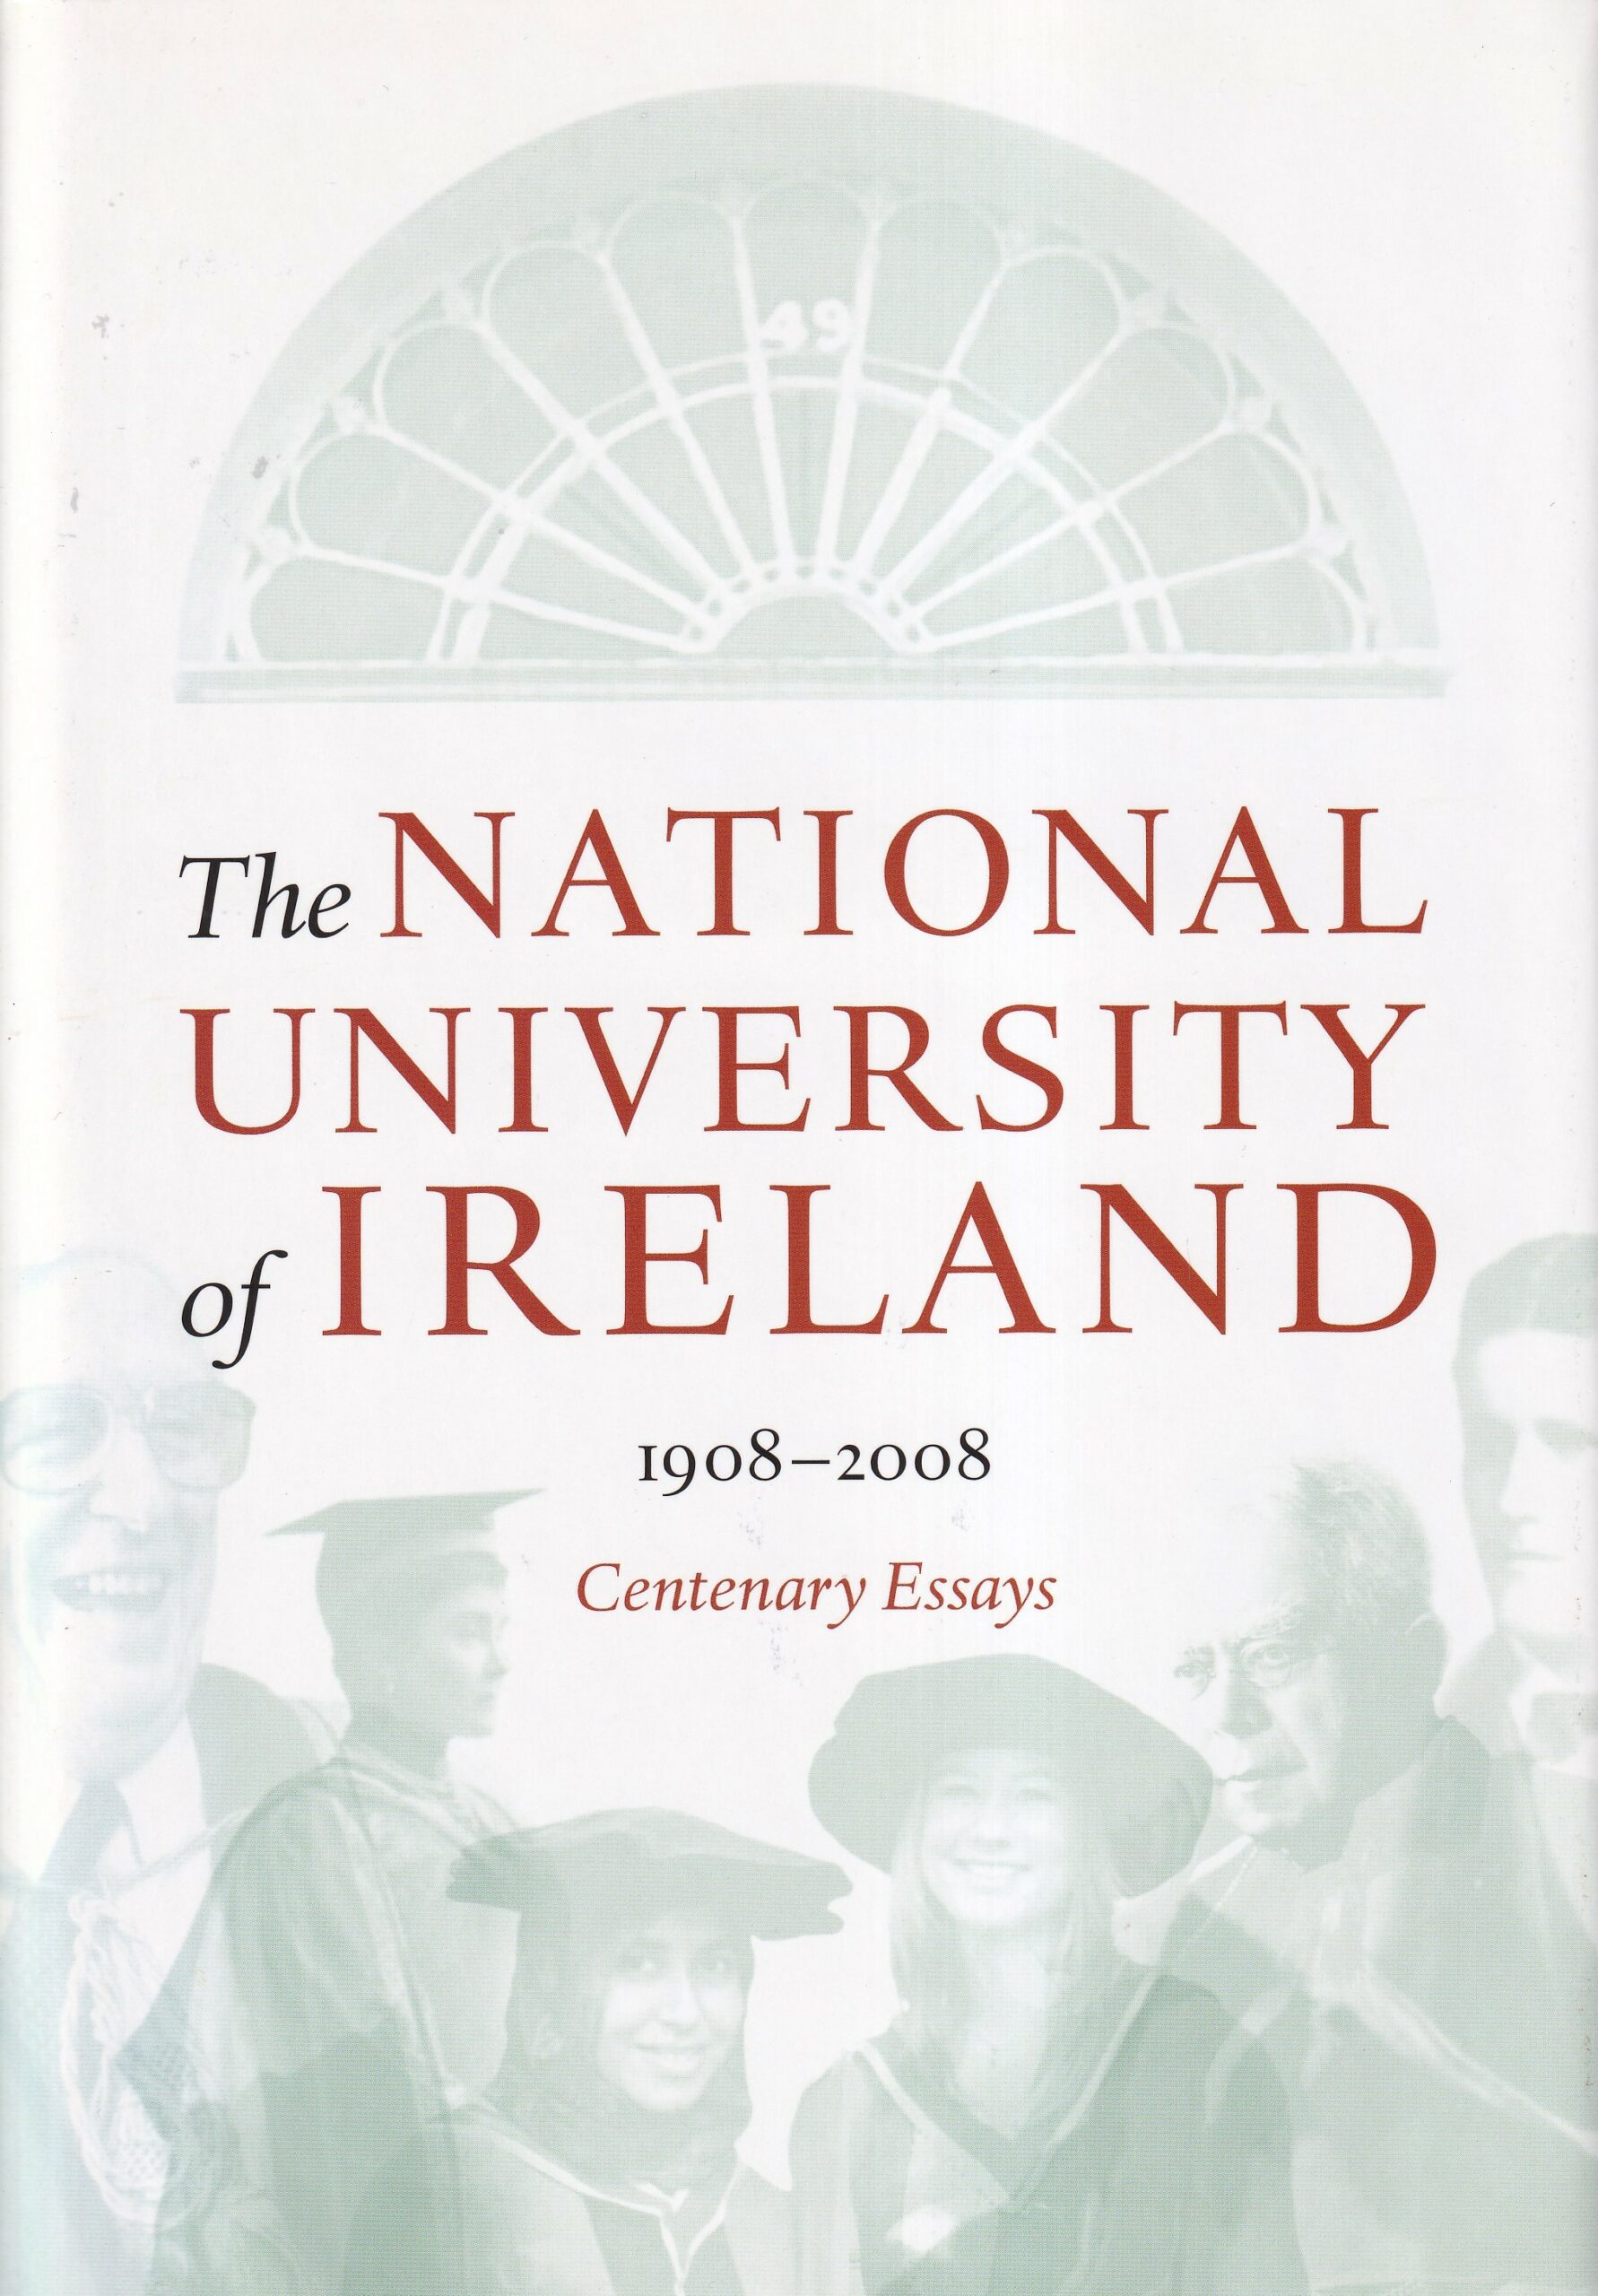 The National University of Ireland 1908-2008: Centenary Essays by Tom Dunne (ed.)